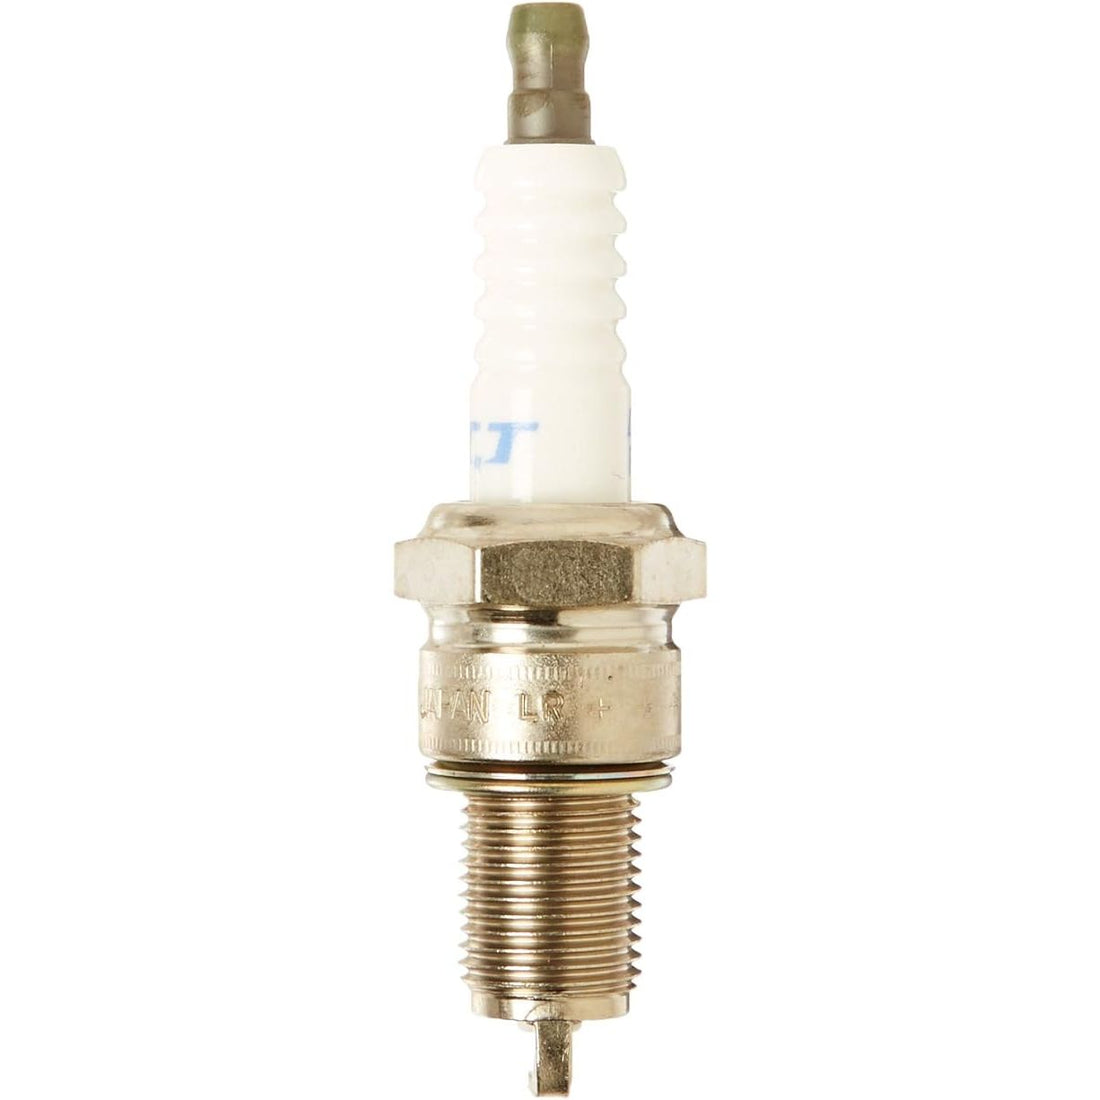 Denso (3093) W22ES-U Traditional Spark Plug, Pack of 1